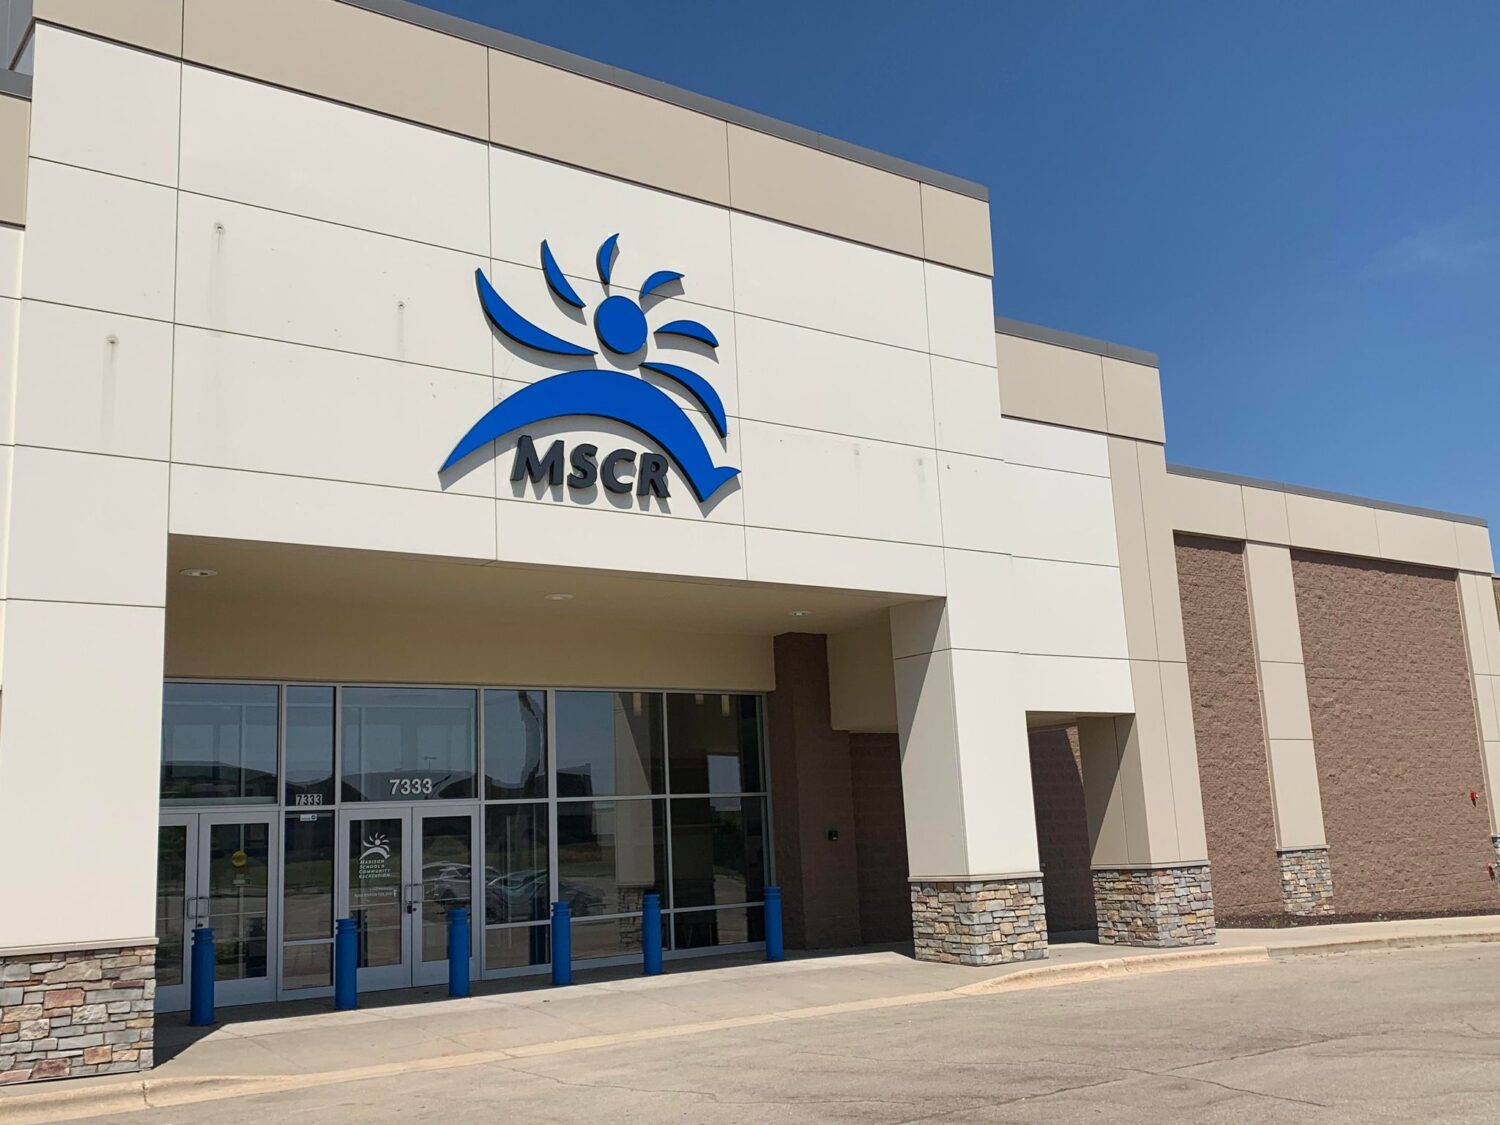 MSCR West location now open, programming begins June 19 | Madison365